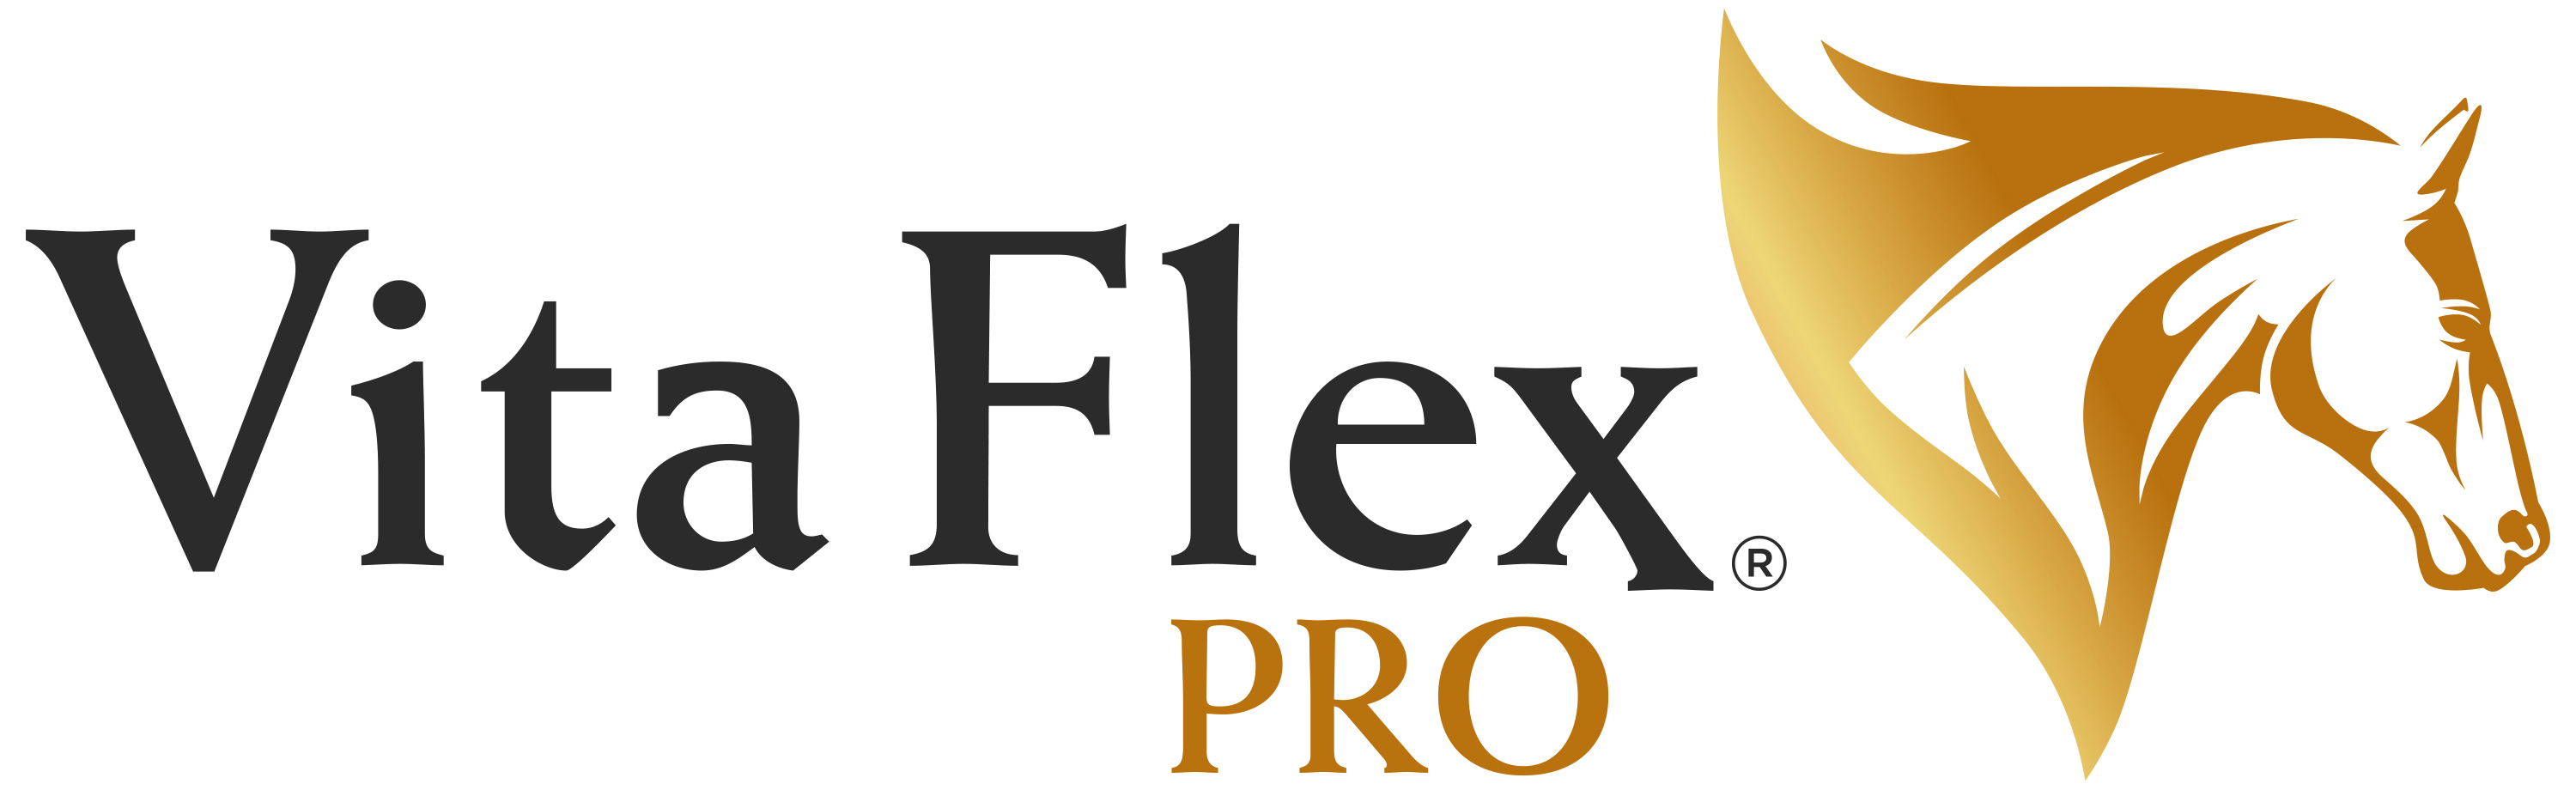 VitaFlexPro_Logo